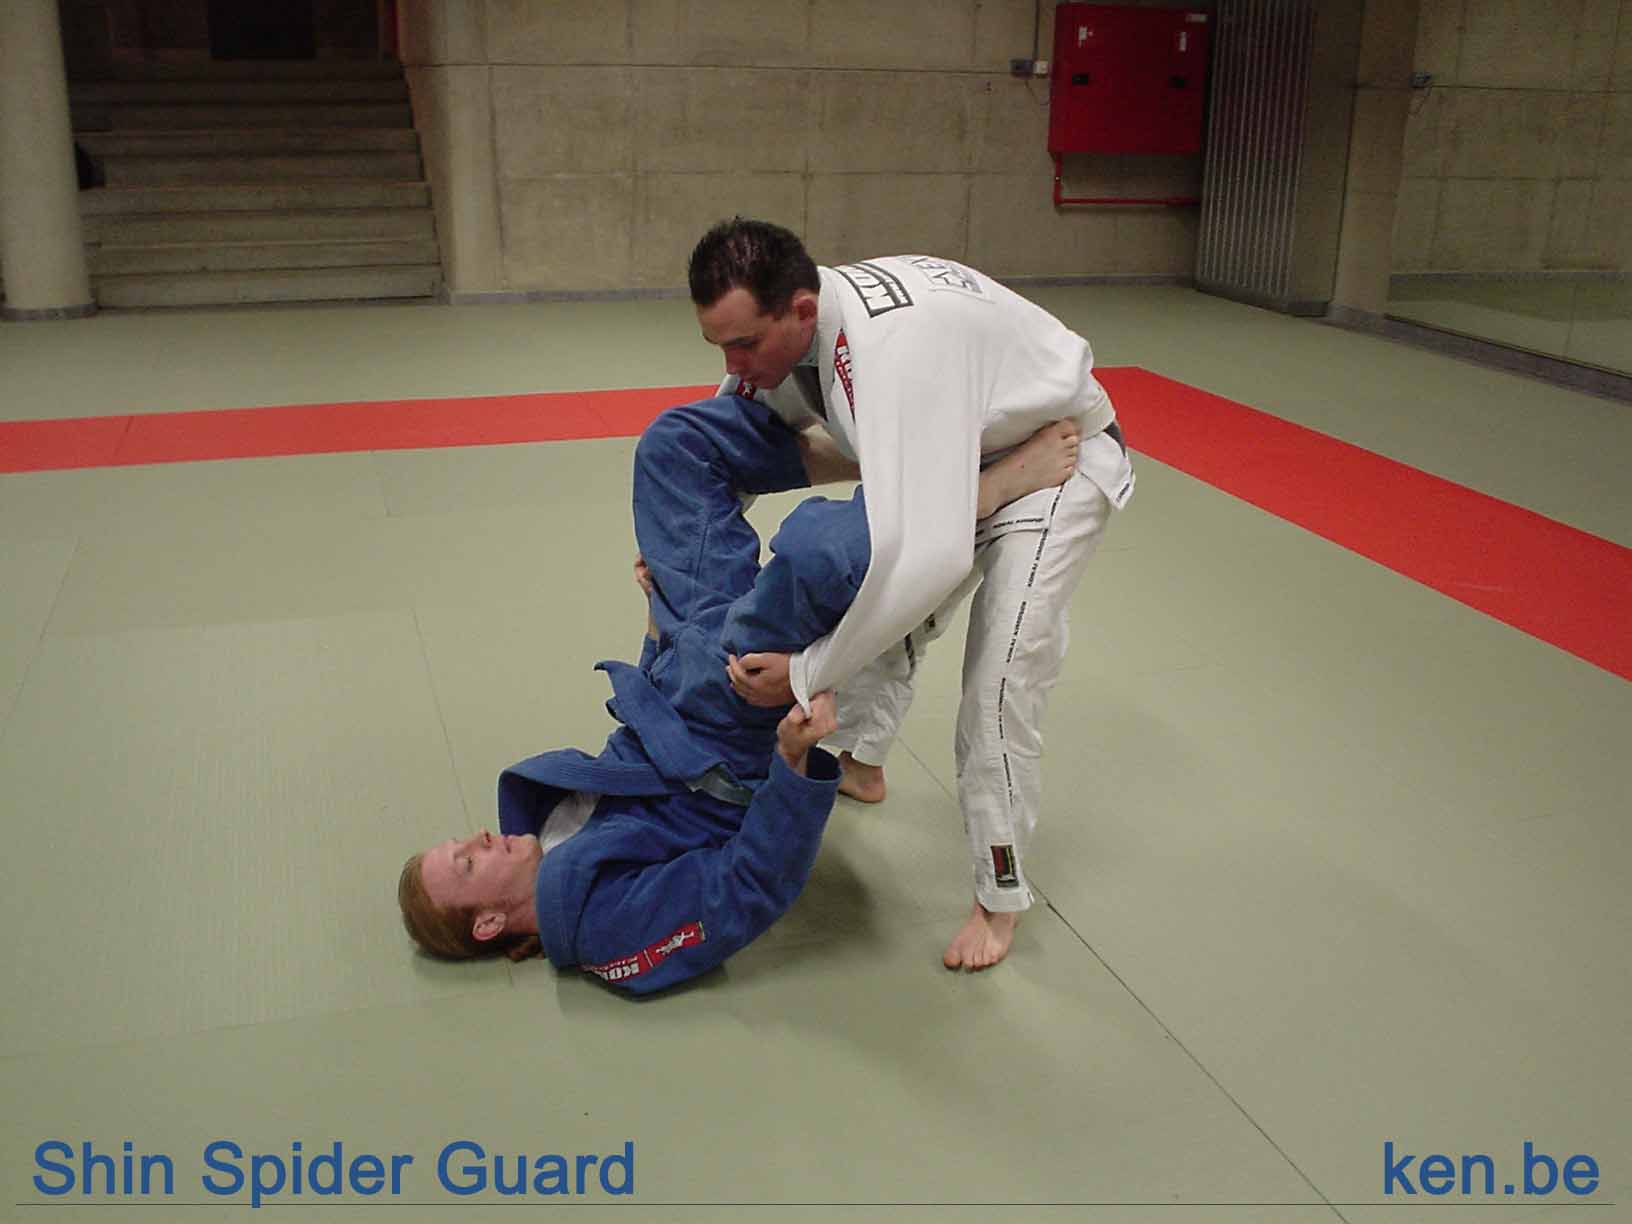 http://www.ken.be/gallery/Vechtsporten/Technieken/Ground%20Positions/shin_spider_guard.jpg